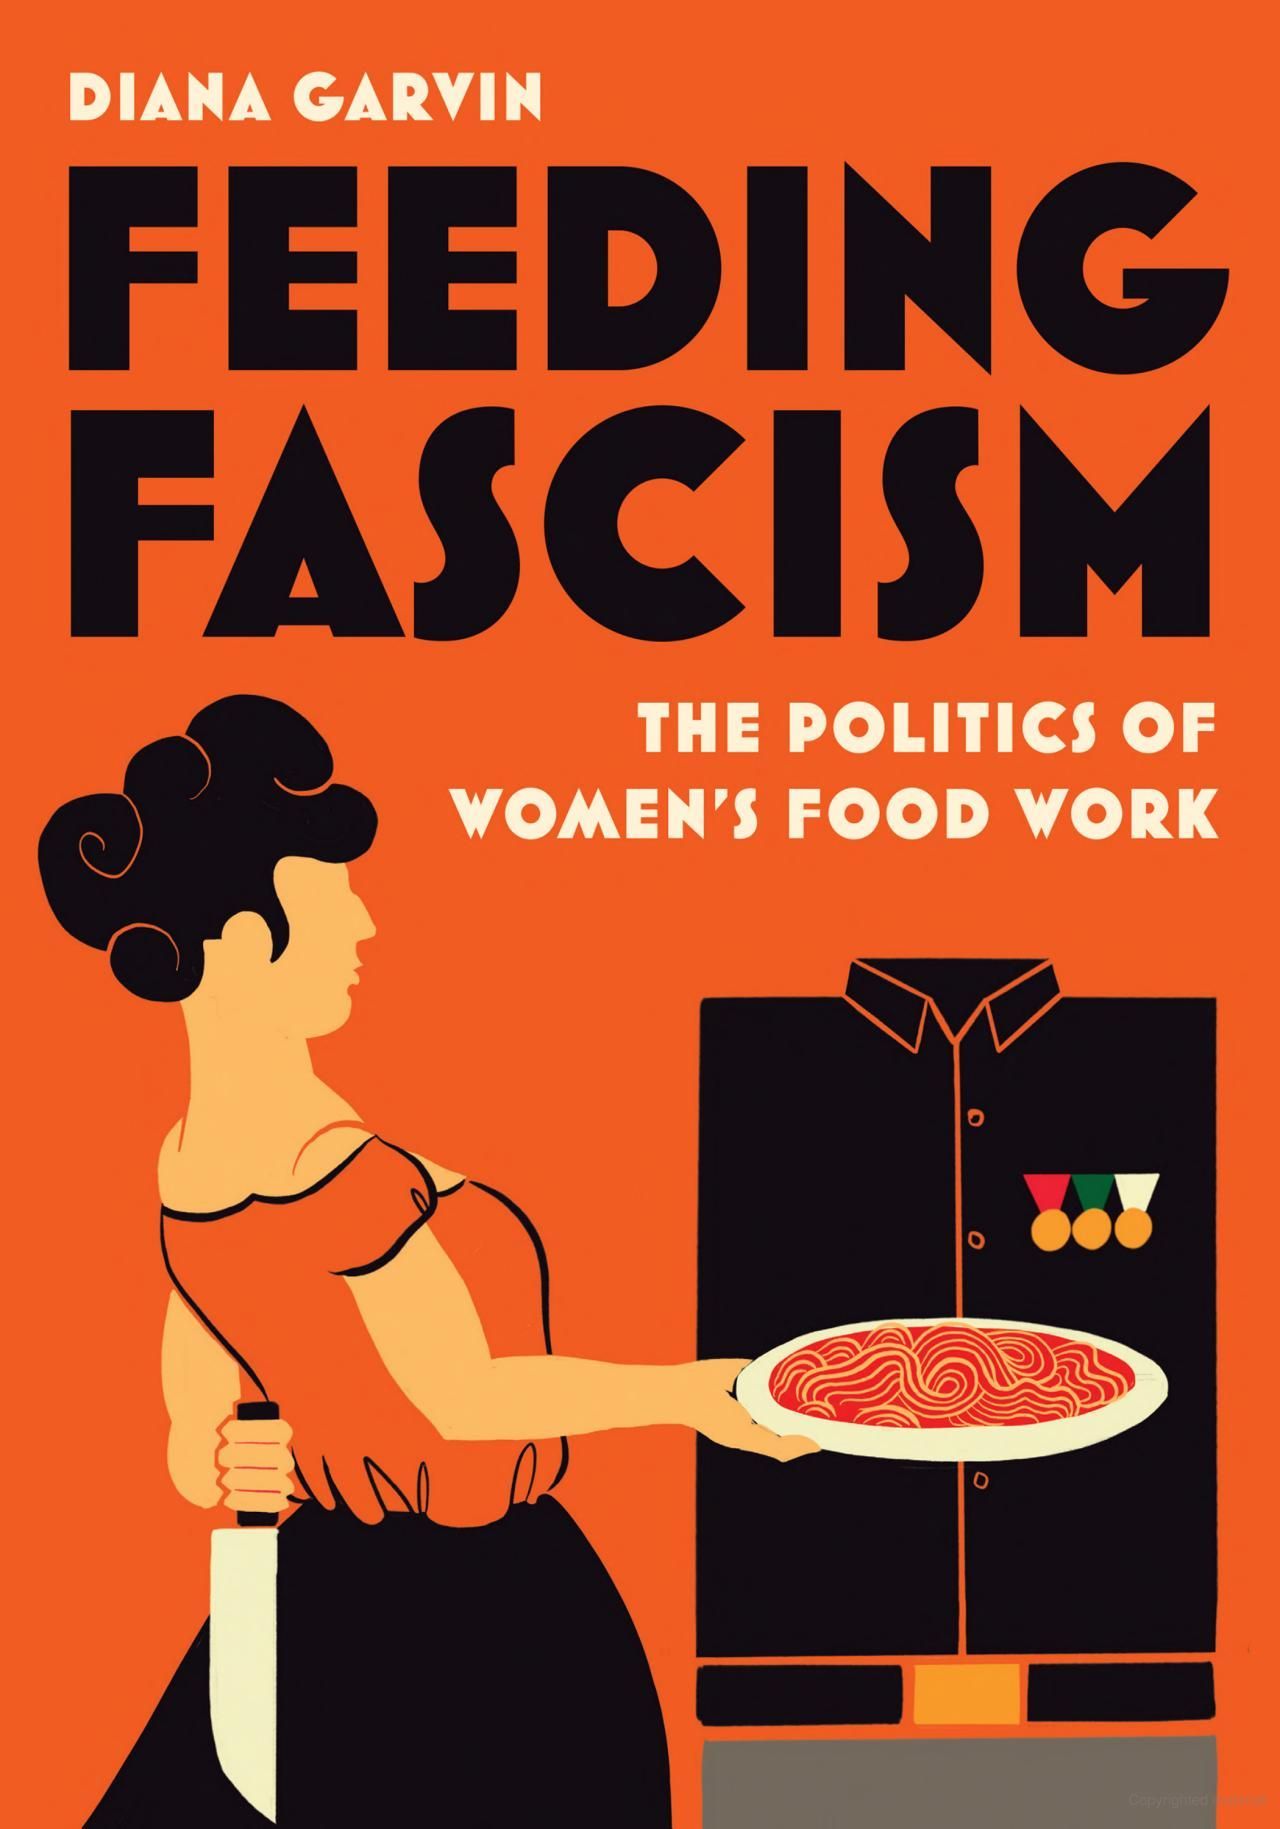 Mussolini’s Kitchen: On Diana Garvin’s “Feeding Fascism”